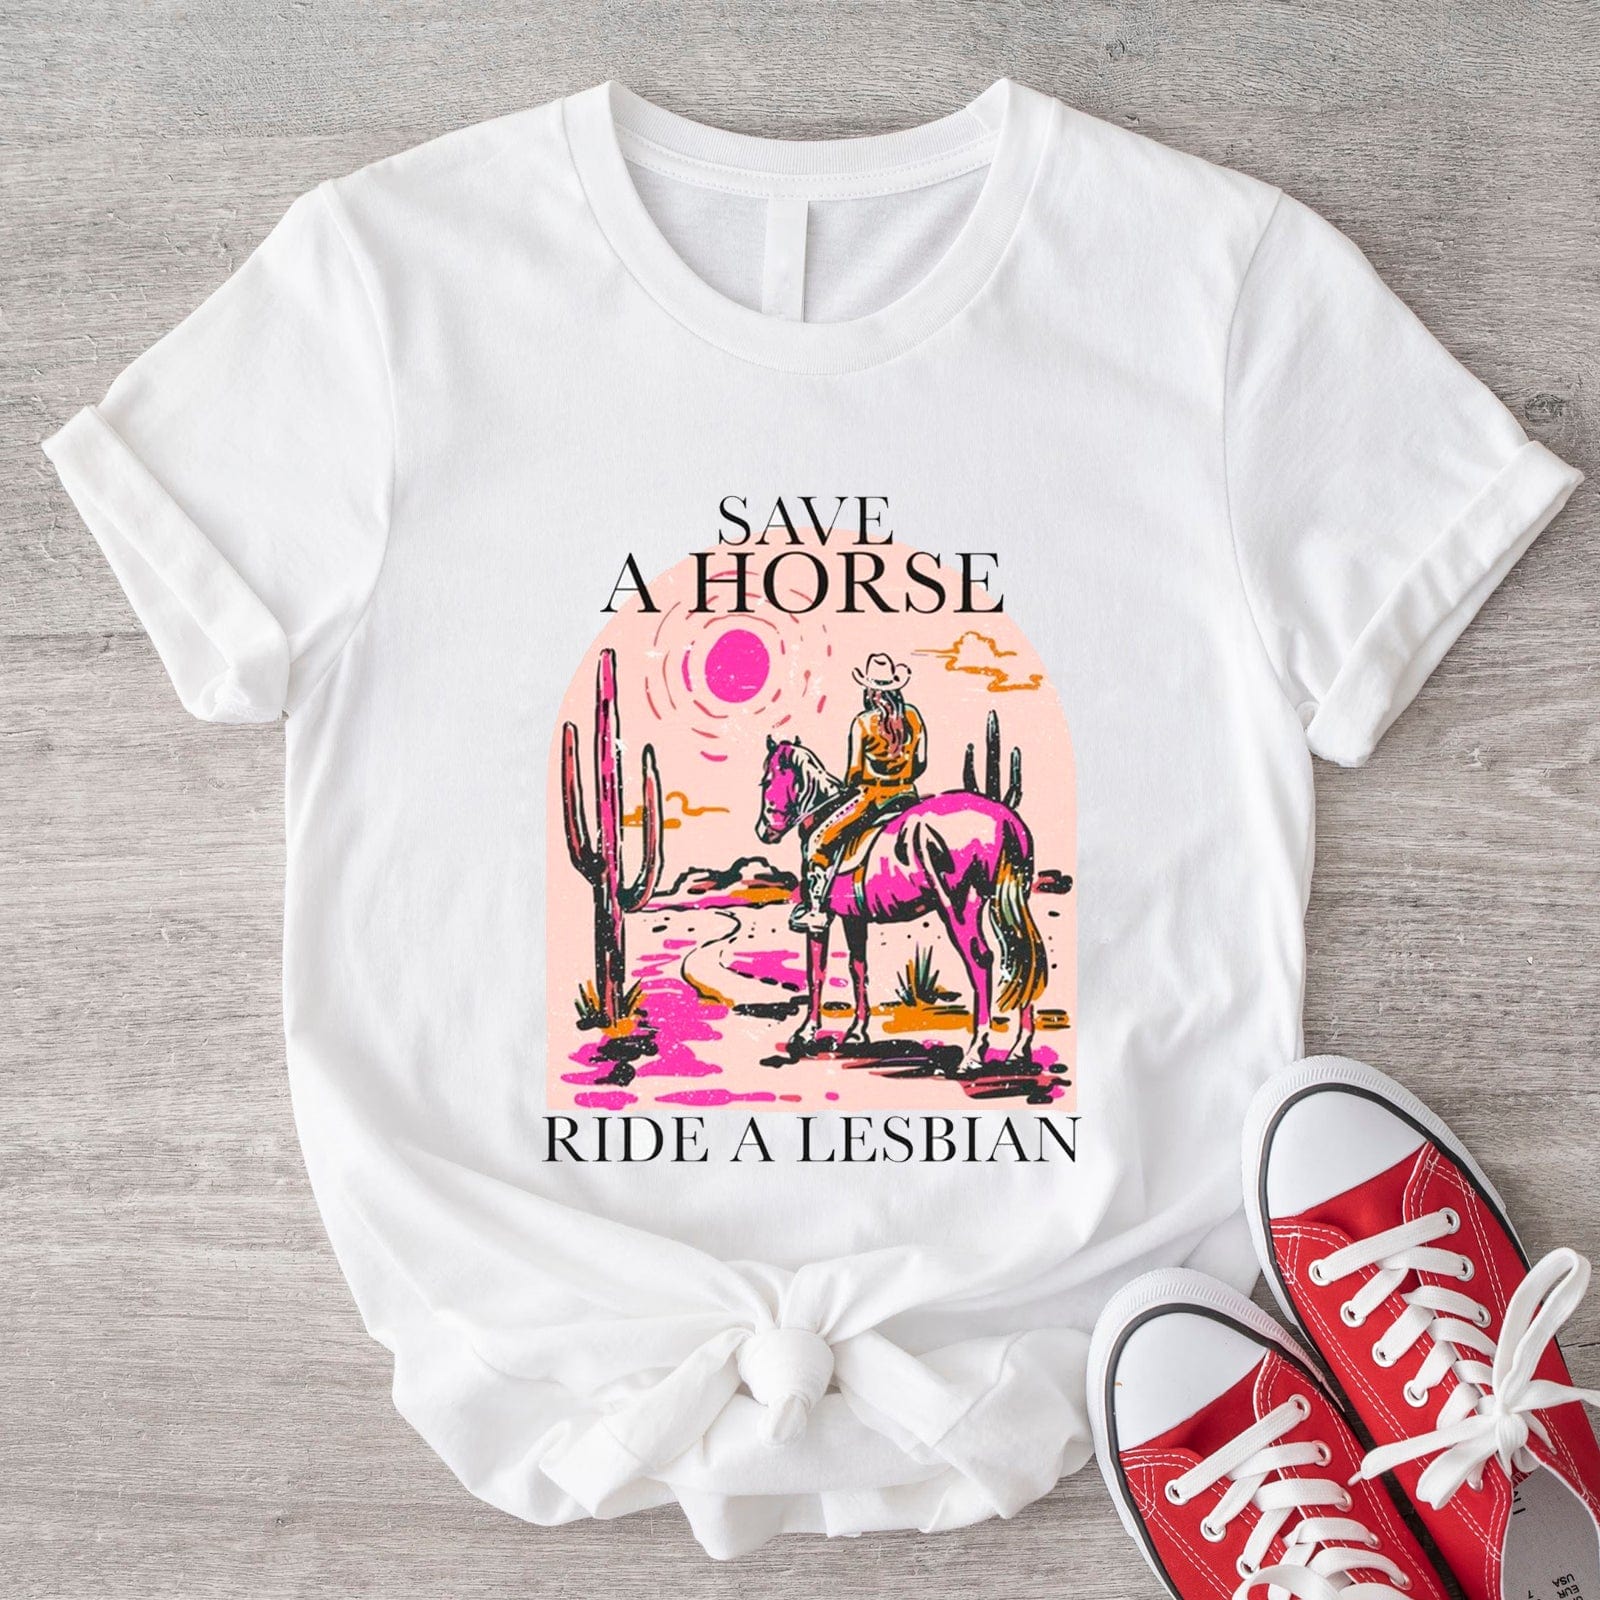 Save A Horse Ride A Lesbian LGBT Cowboy Shirt